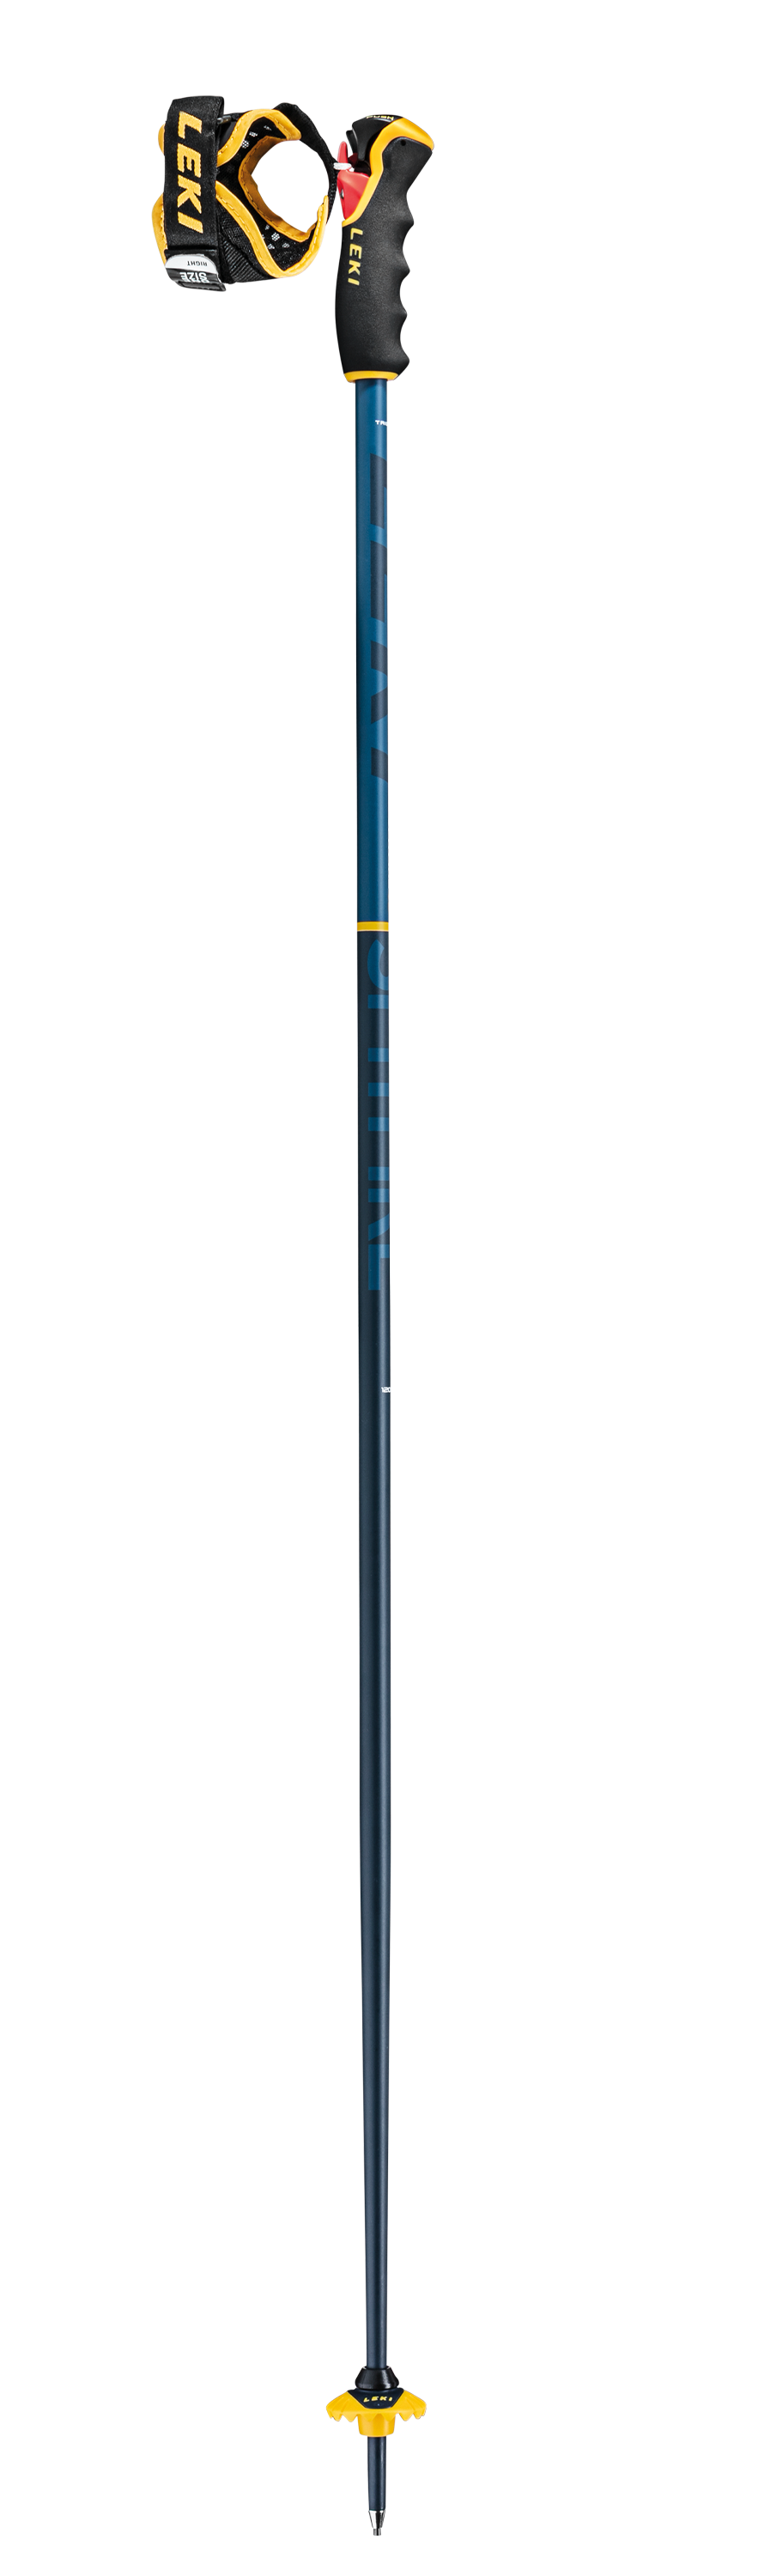 Bâtons de Ski Spitfire 3D 